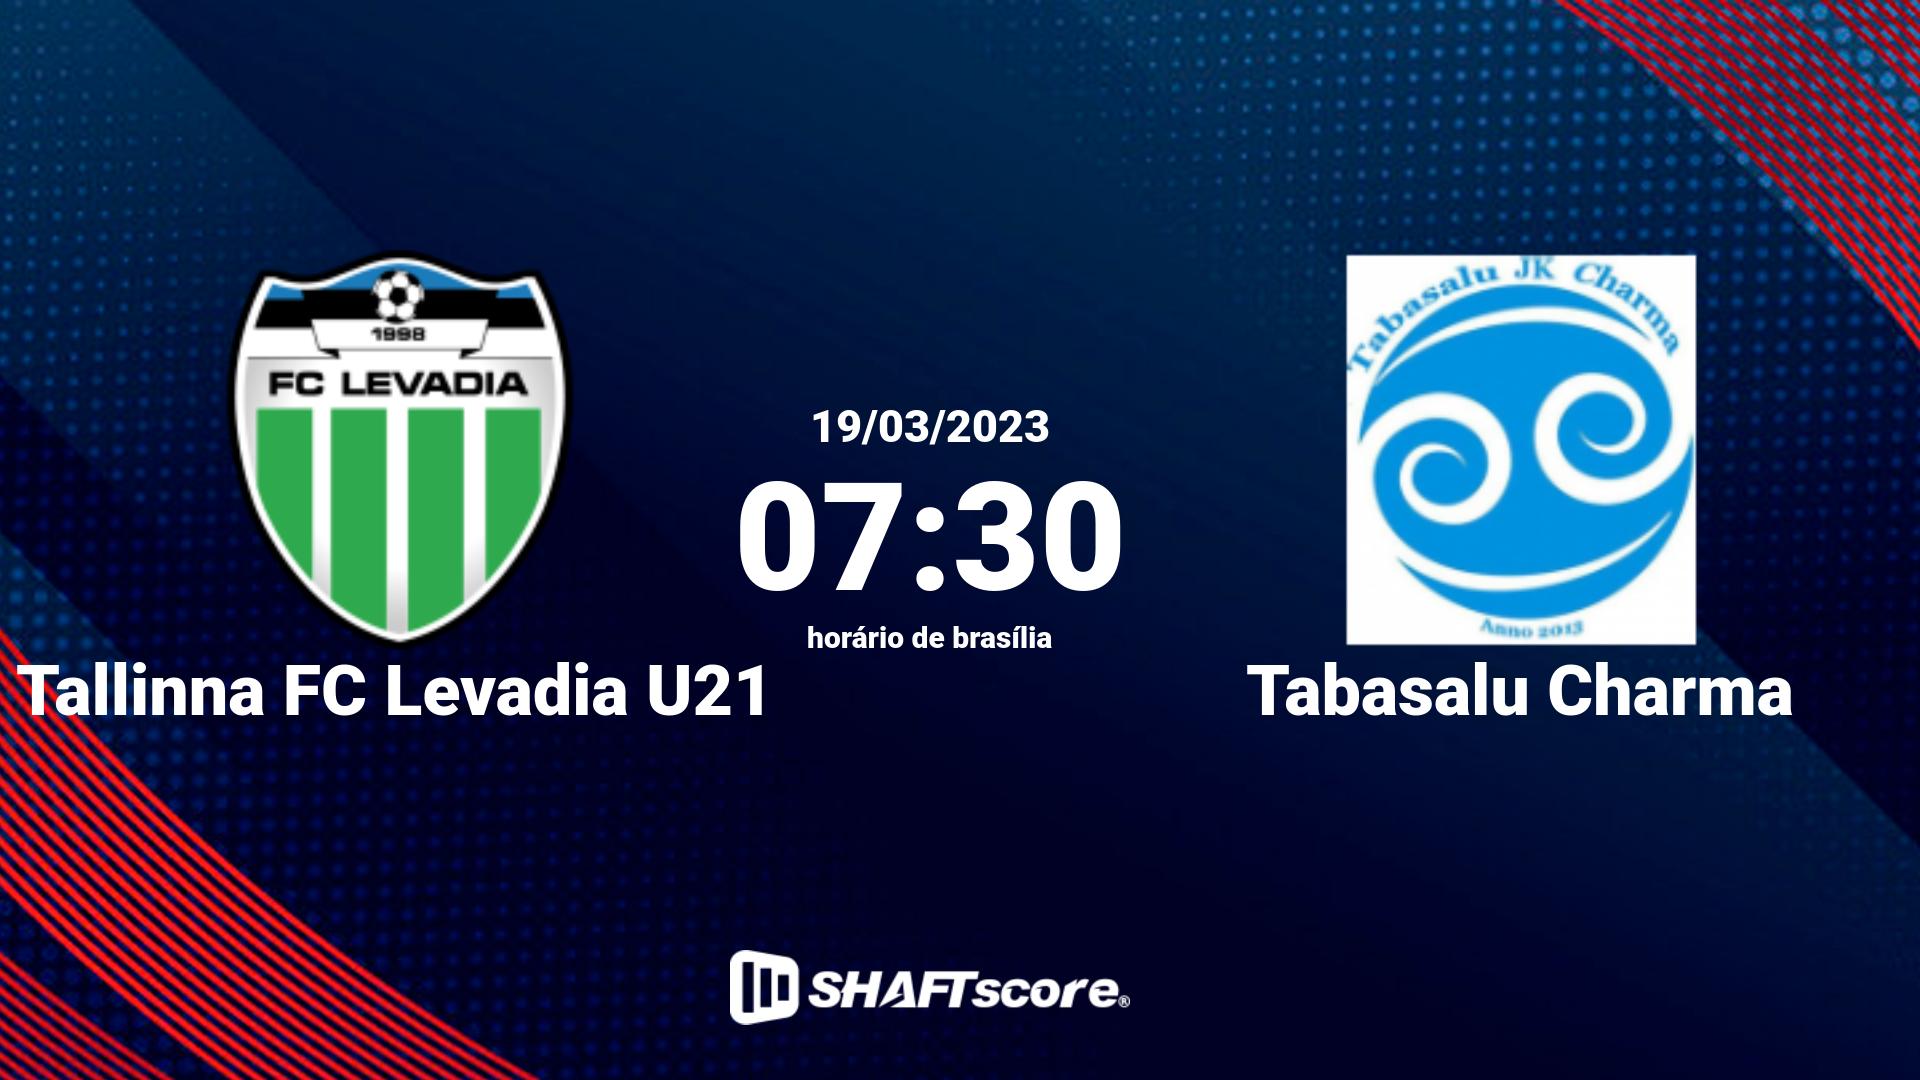 Estatísticas do jogo Tallinna FC Levadia U21 vs Tabasalu Charma 19.03 07:30